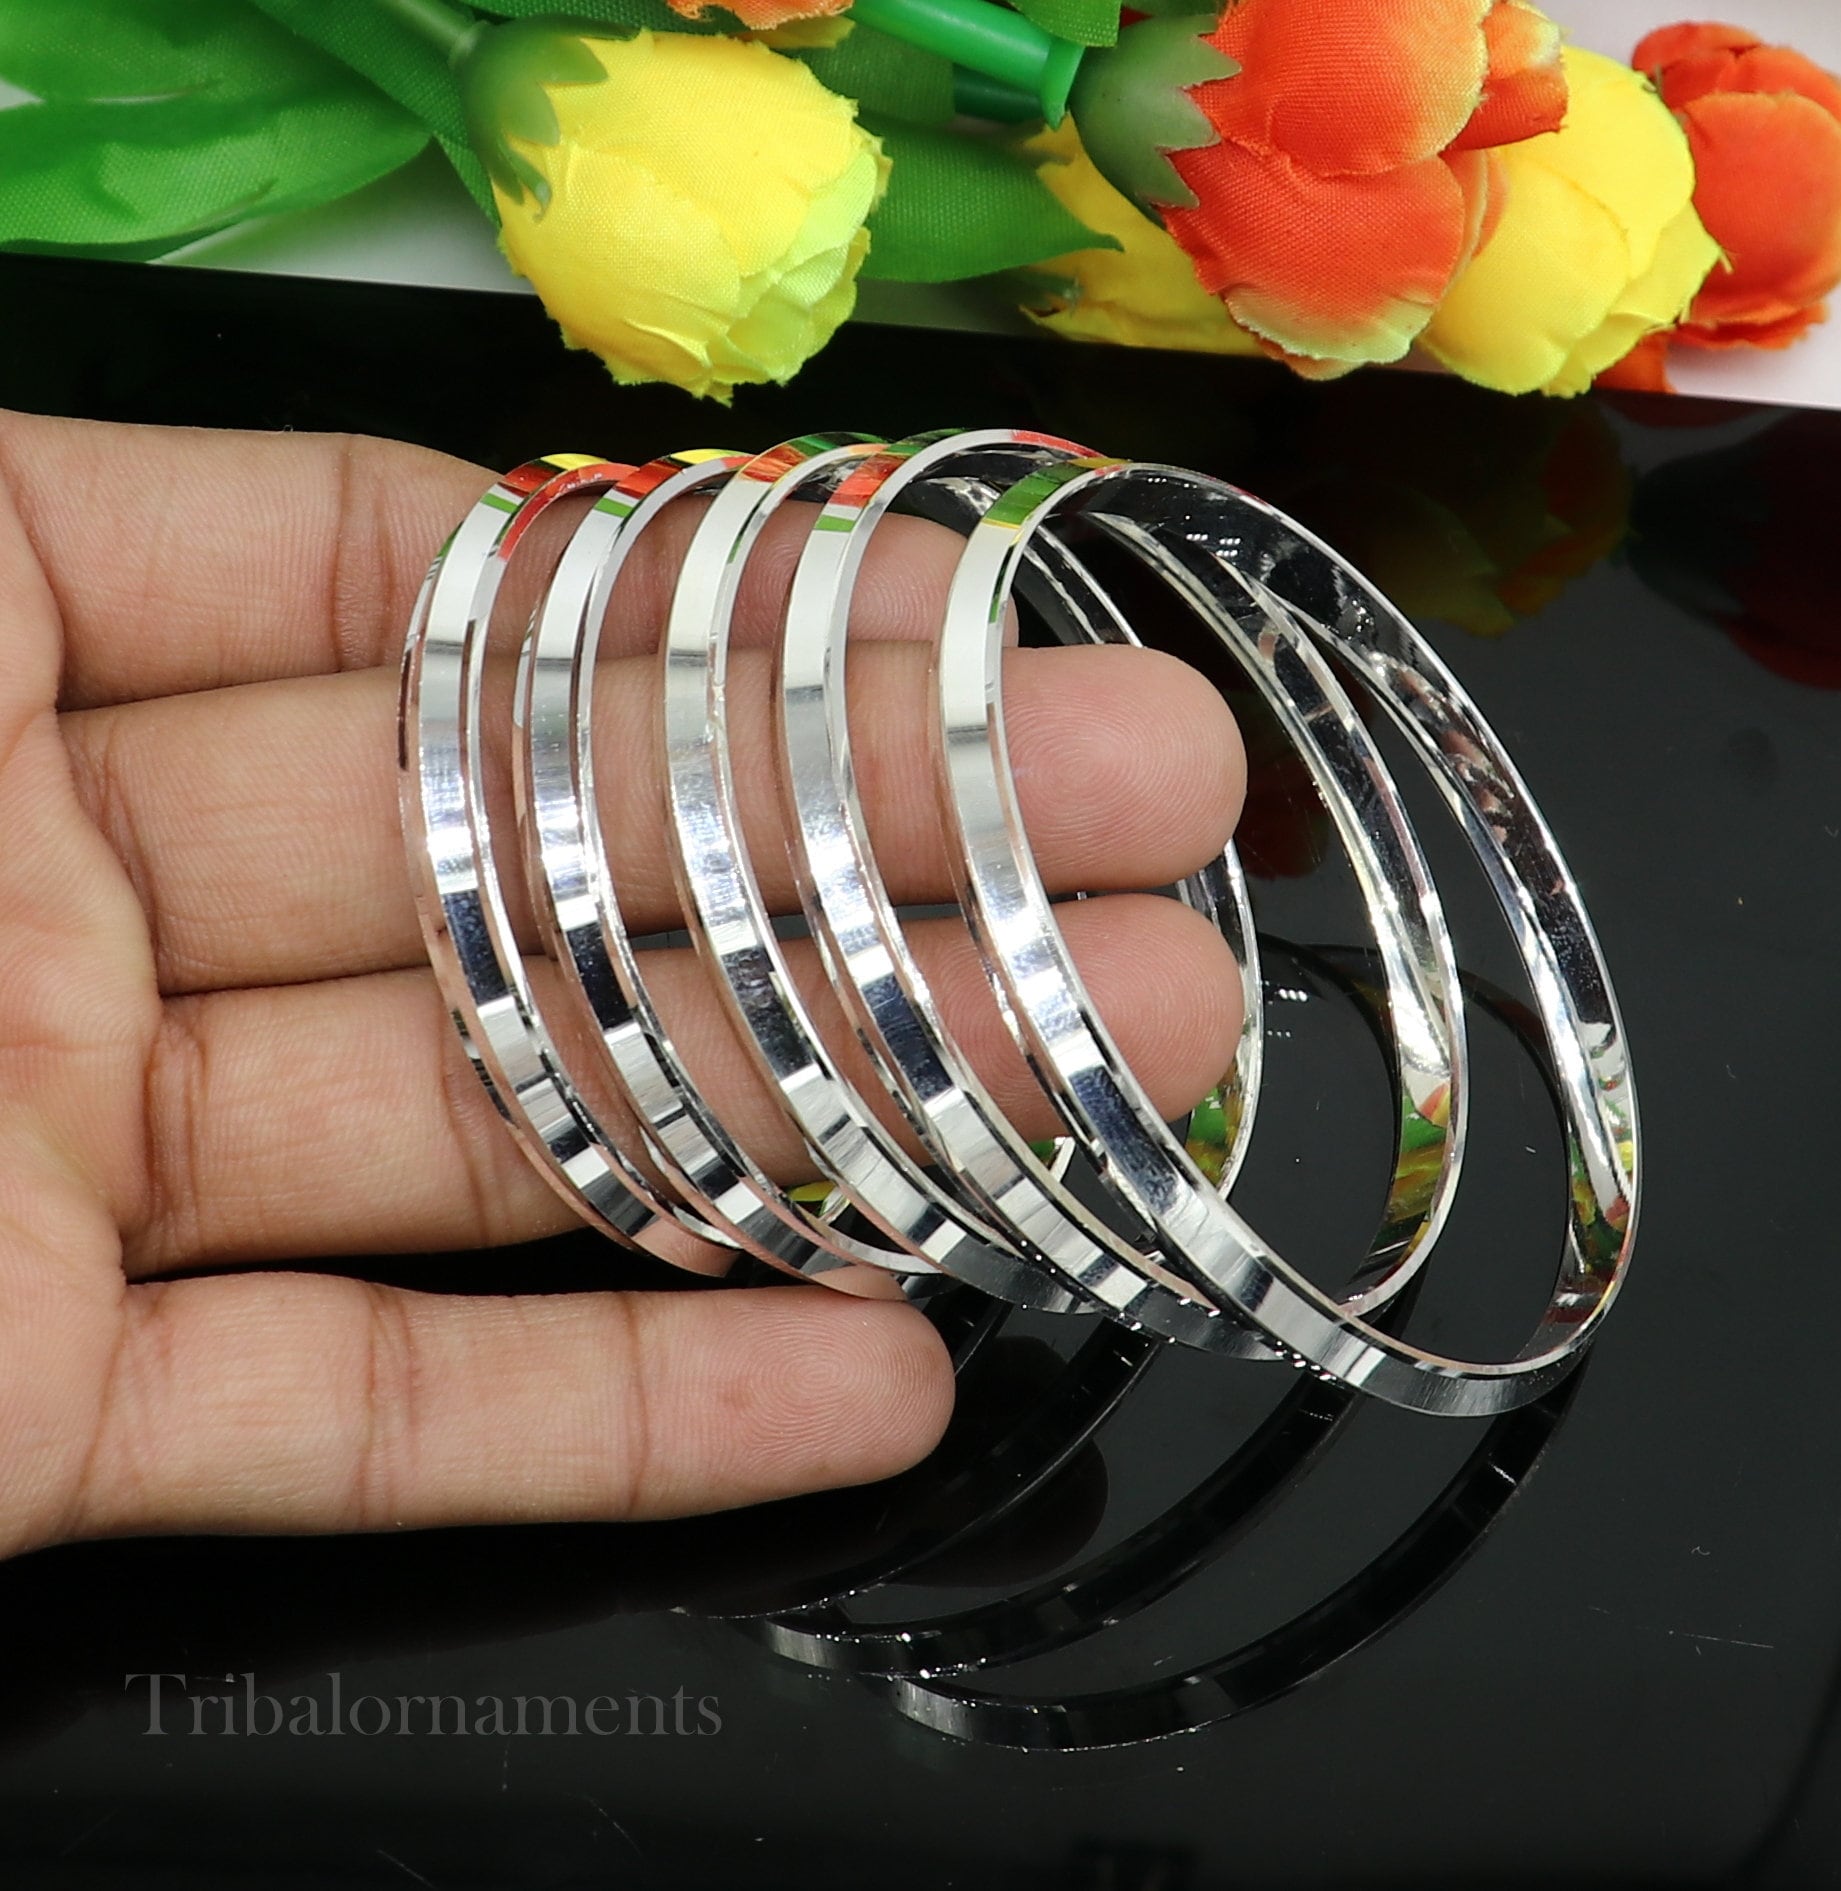 Solid 925 sterling silver handmade Punjabi Sikha bracelet kada, all sized men's or girl's bangle kada daily use jewelry nsk806 - TRIBAL ORNAMENTS